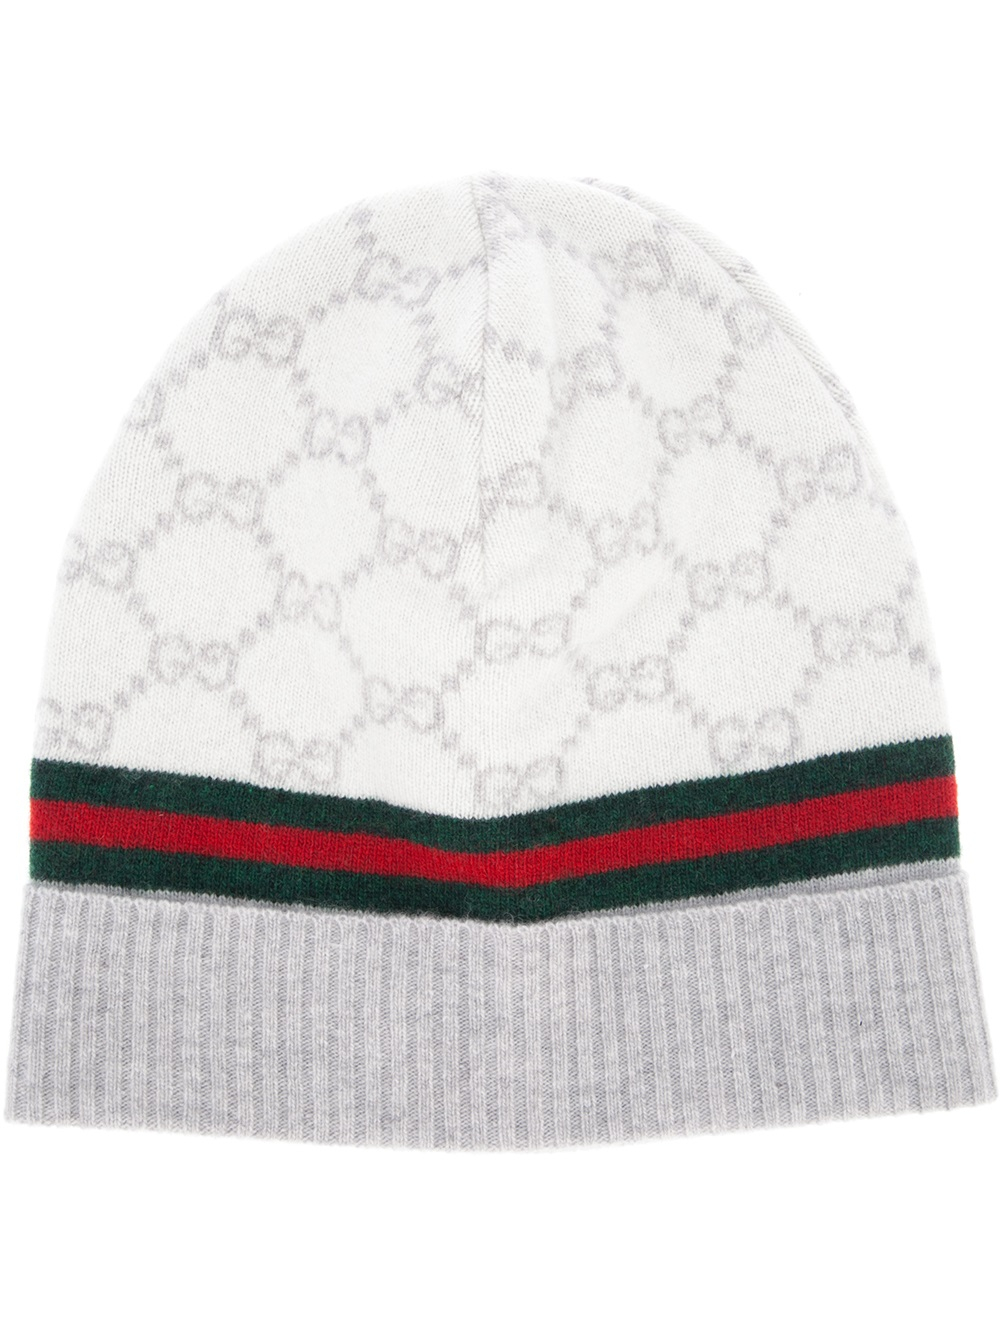 Gucci Monogram Beanie Hat in Natural | Lyst